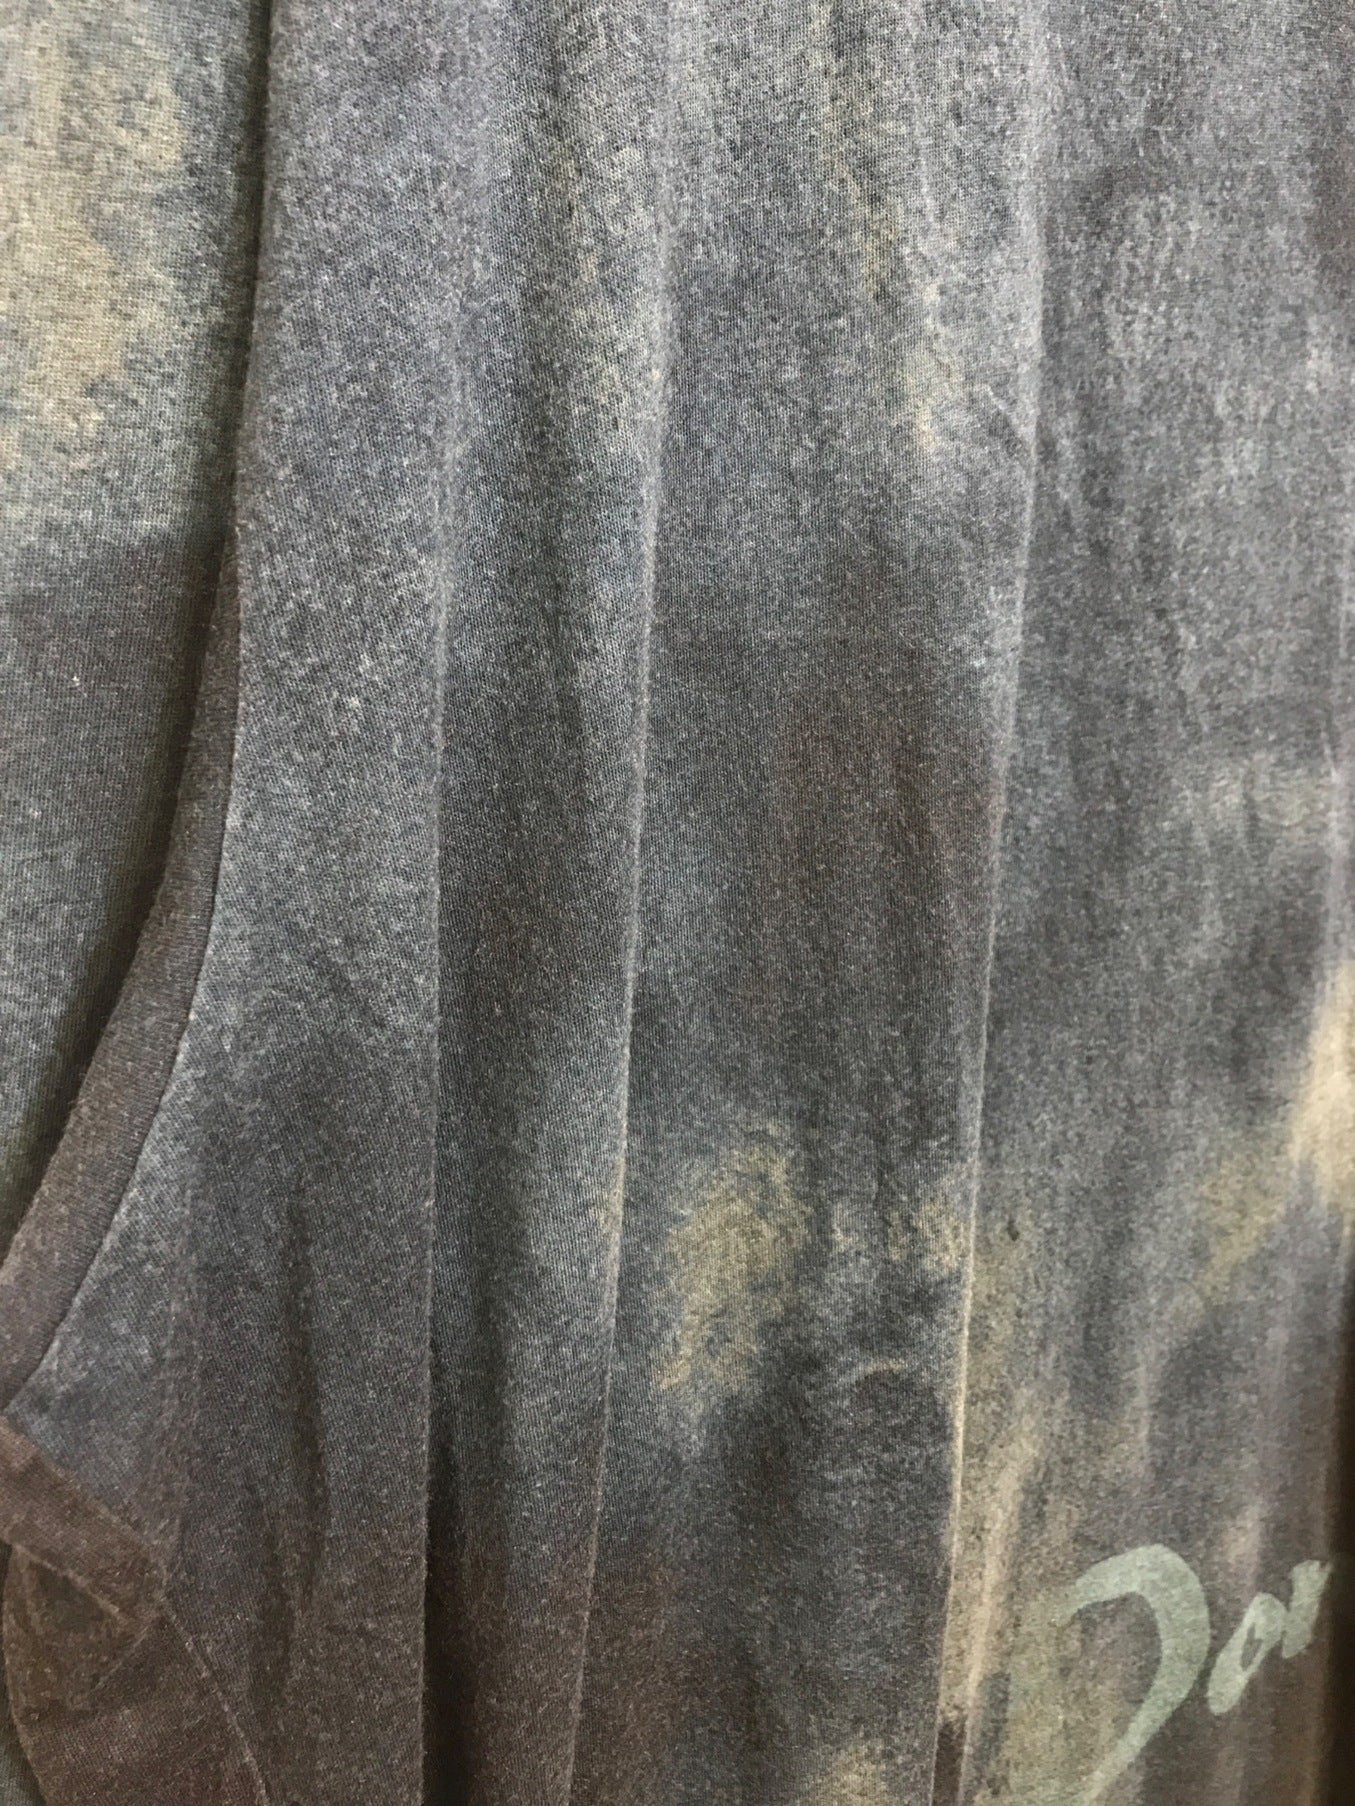 Yohji Yamamoto Pour Homme Transfer Print Layed Long-Sleeved Cut 및 Sewn HW-T67-279